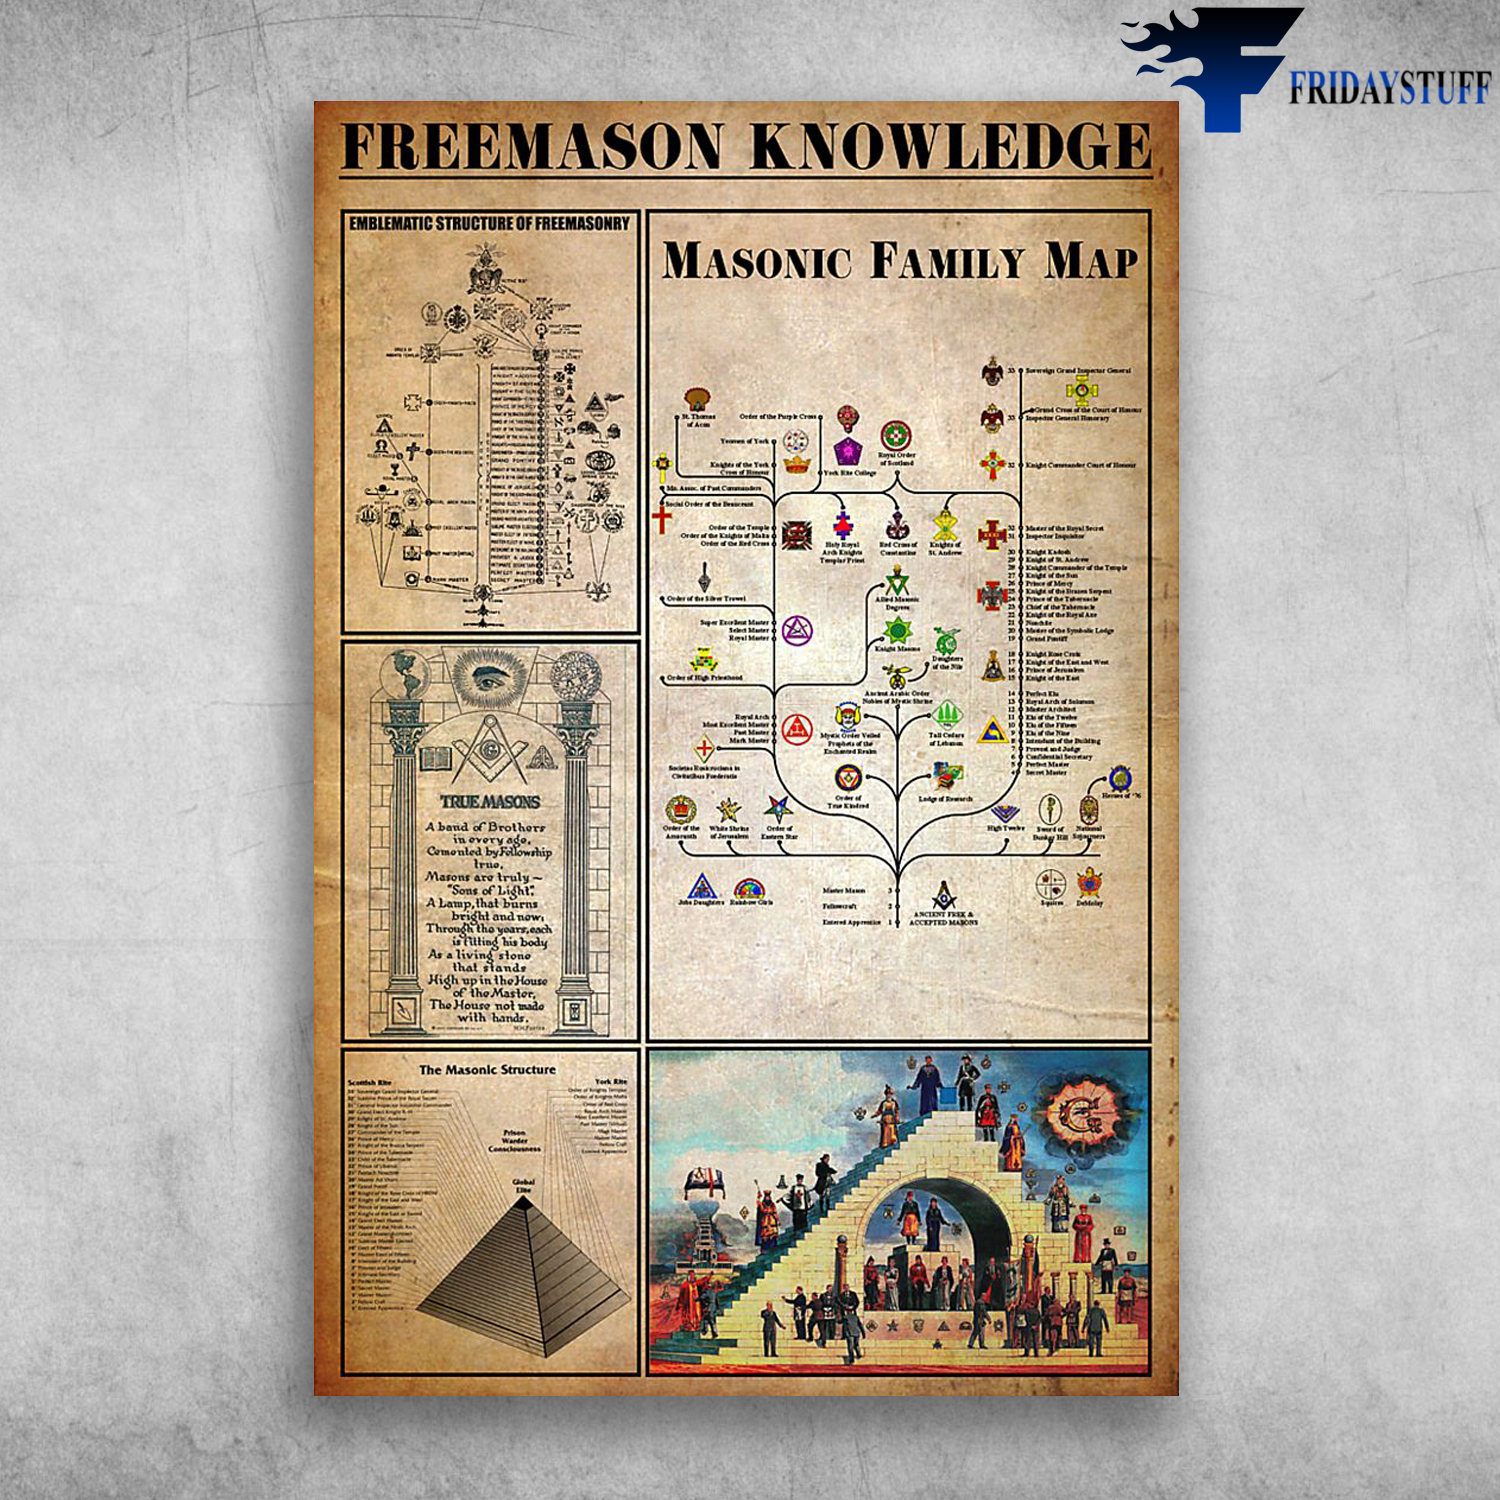 Freemason Knowledge Emblematic Structure Of Freemasonry Masonic Family Map